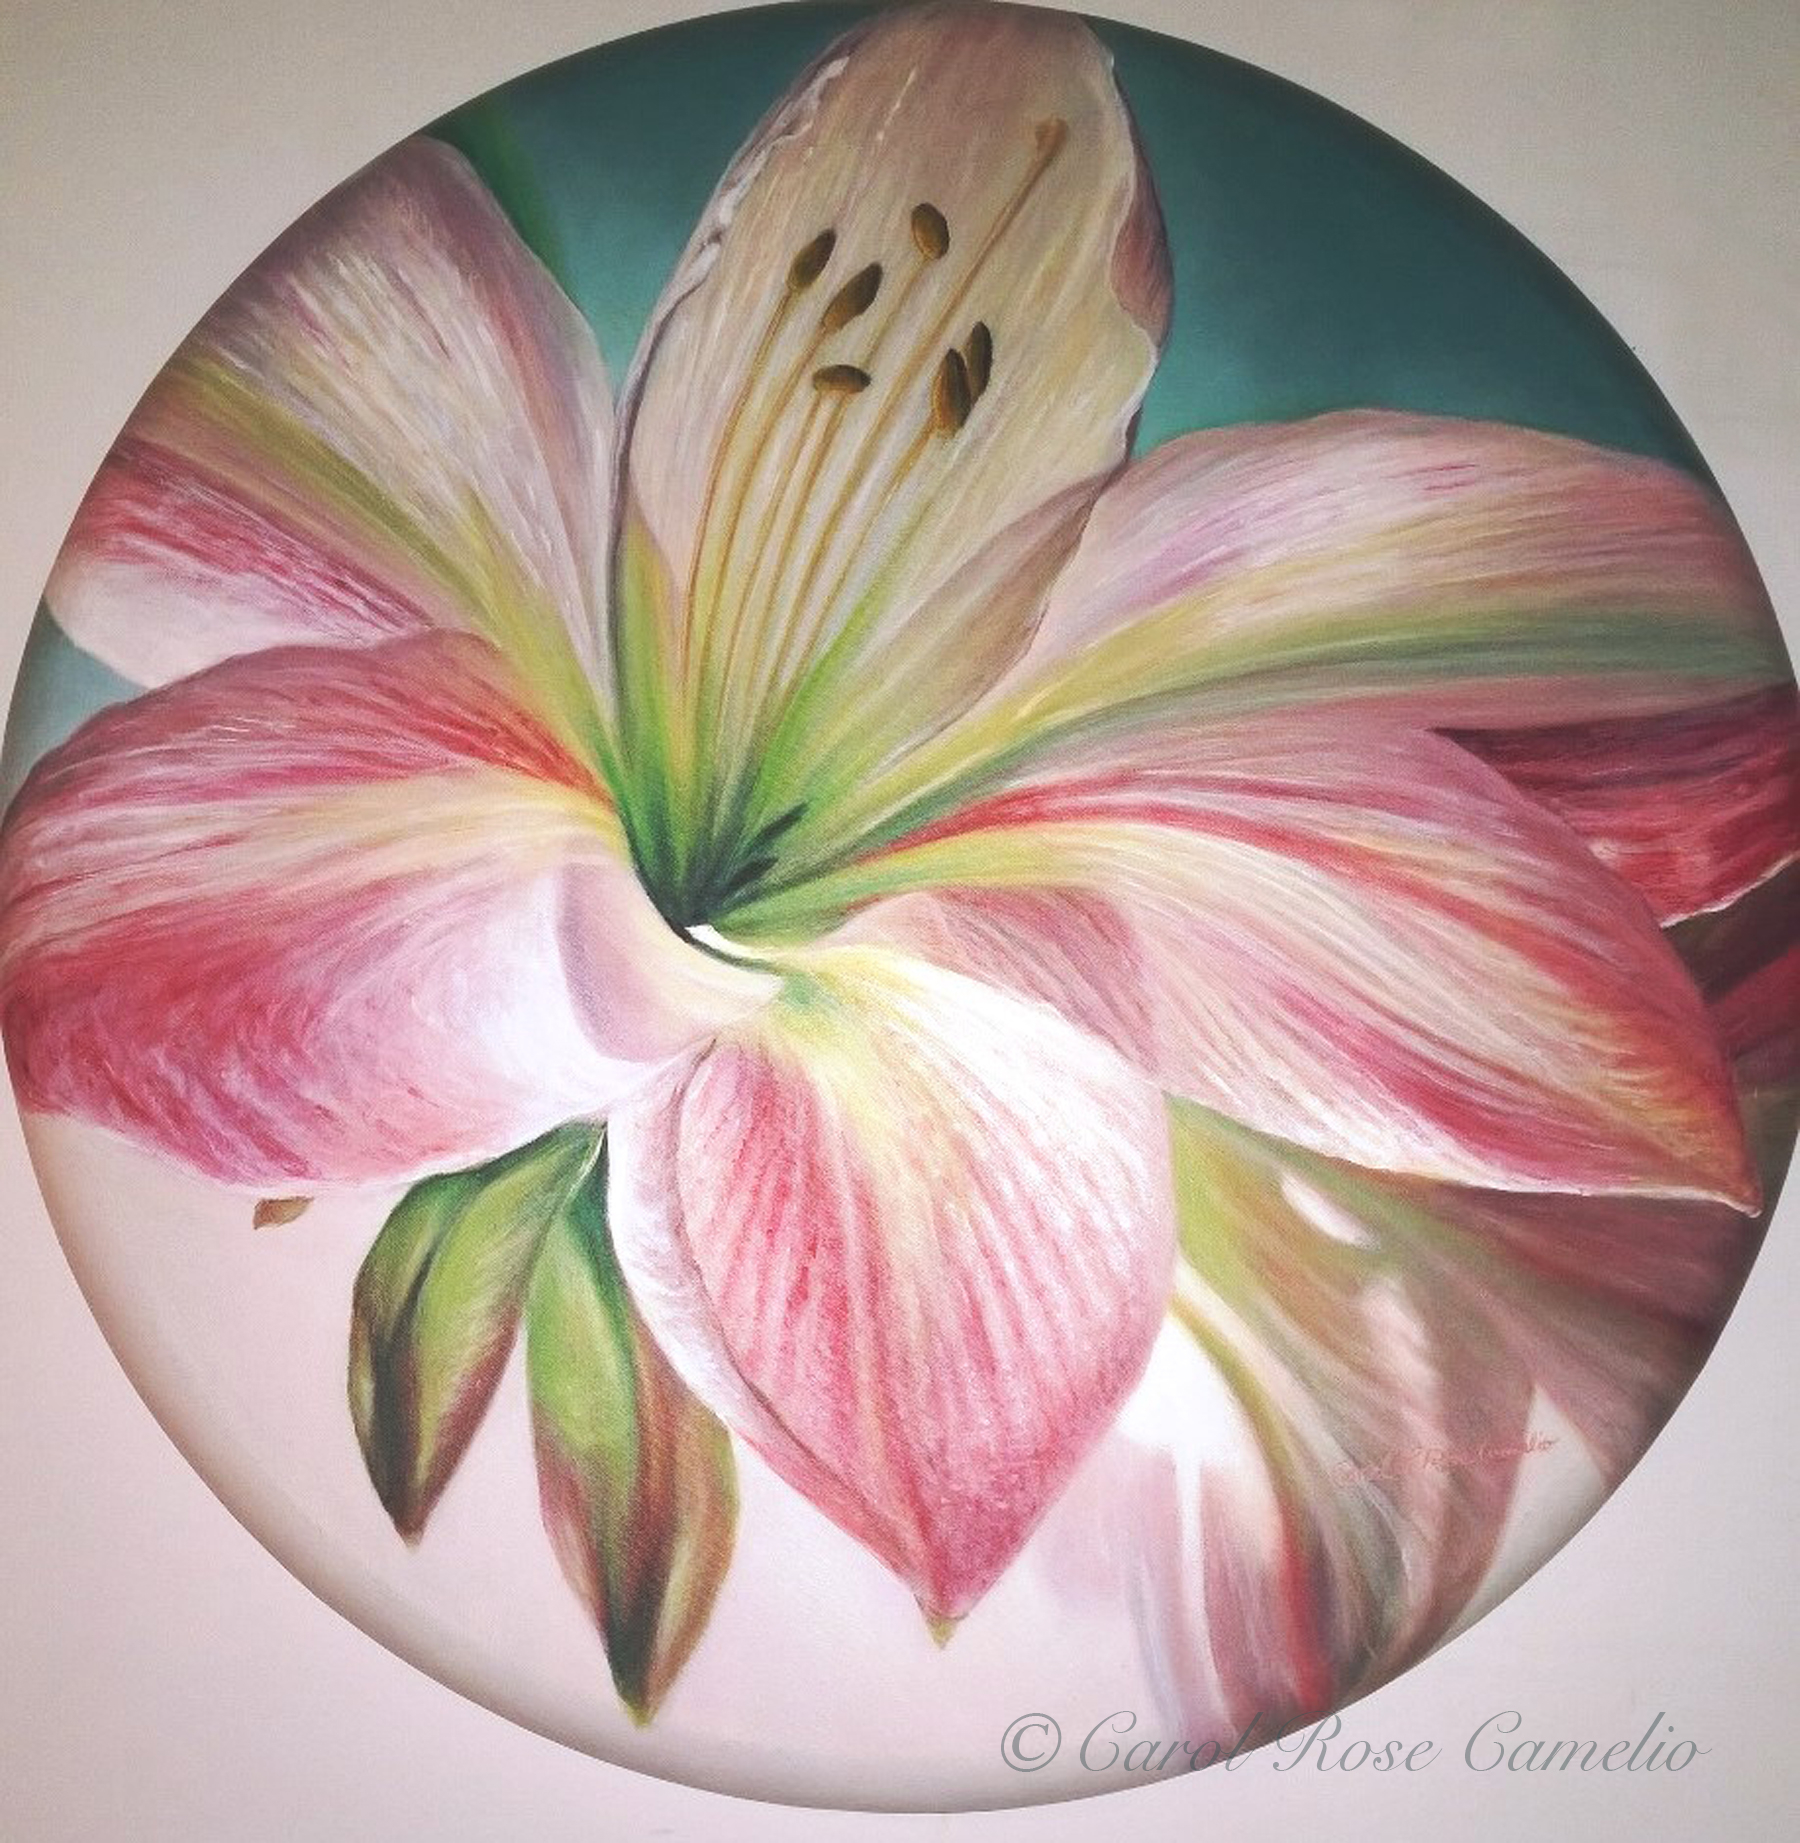 Amaryllis: A closeup of a bright pink amaryllis flower.